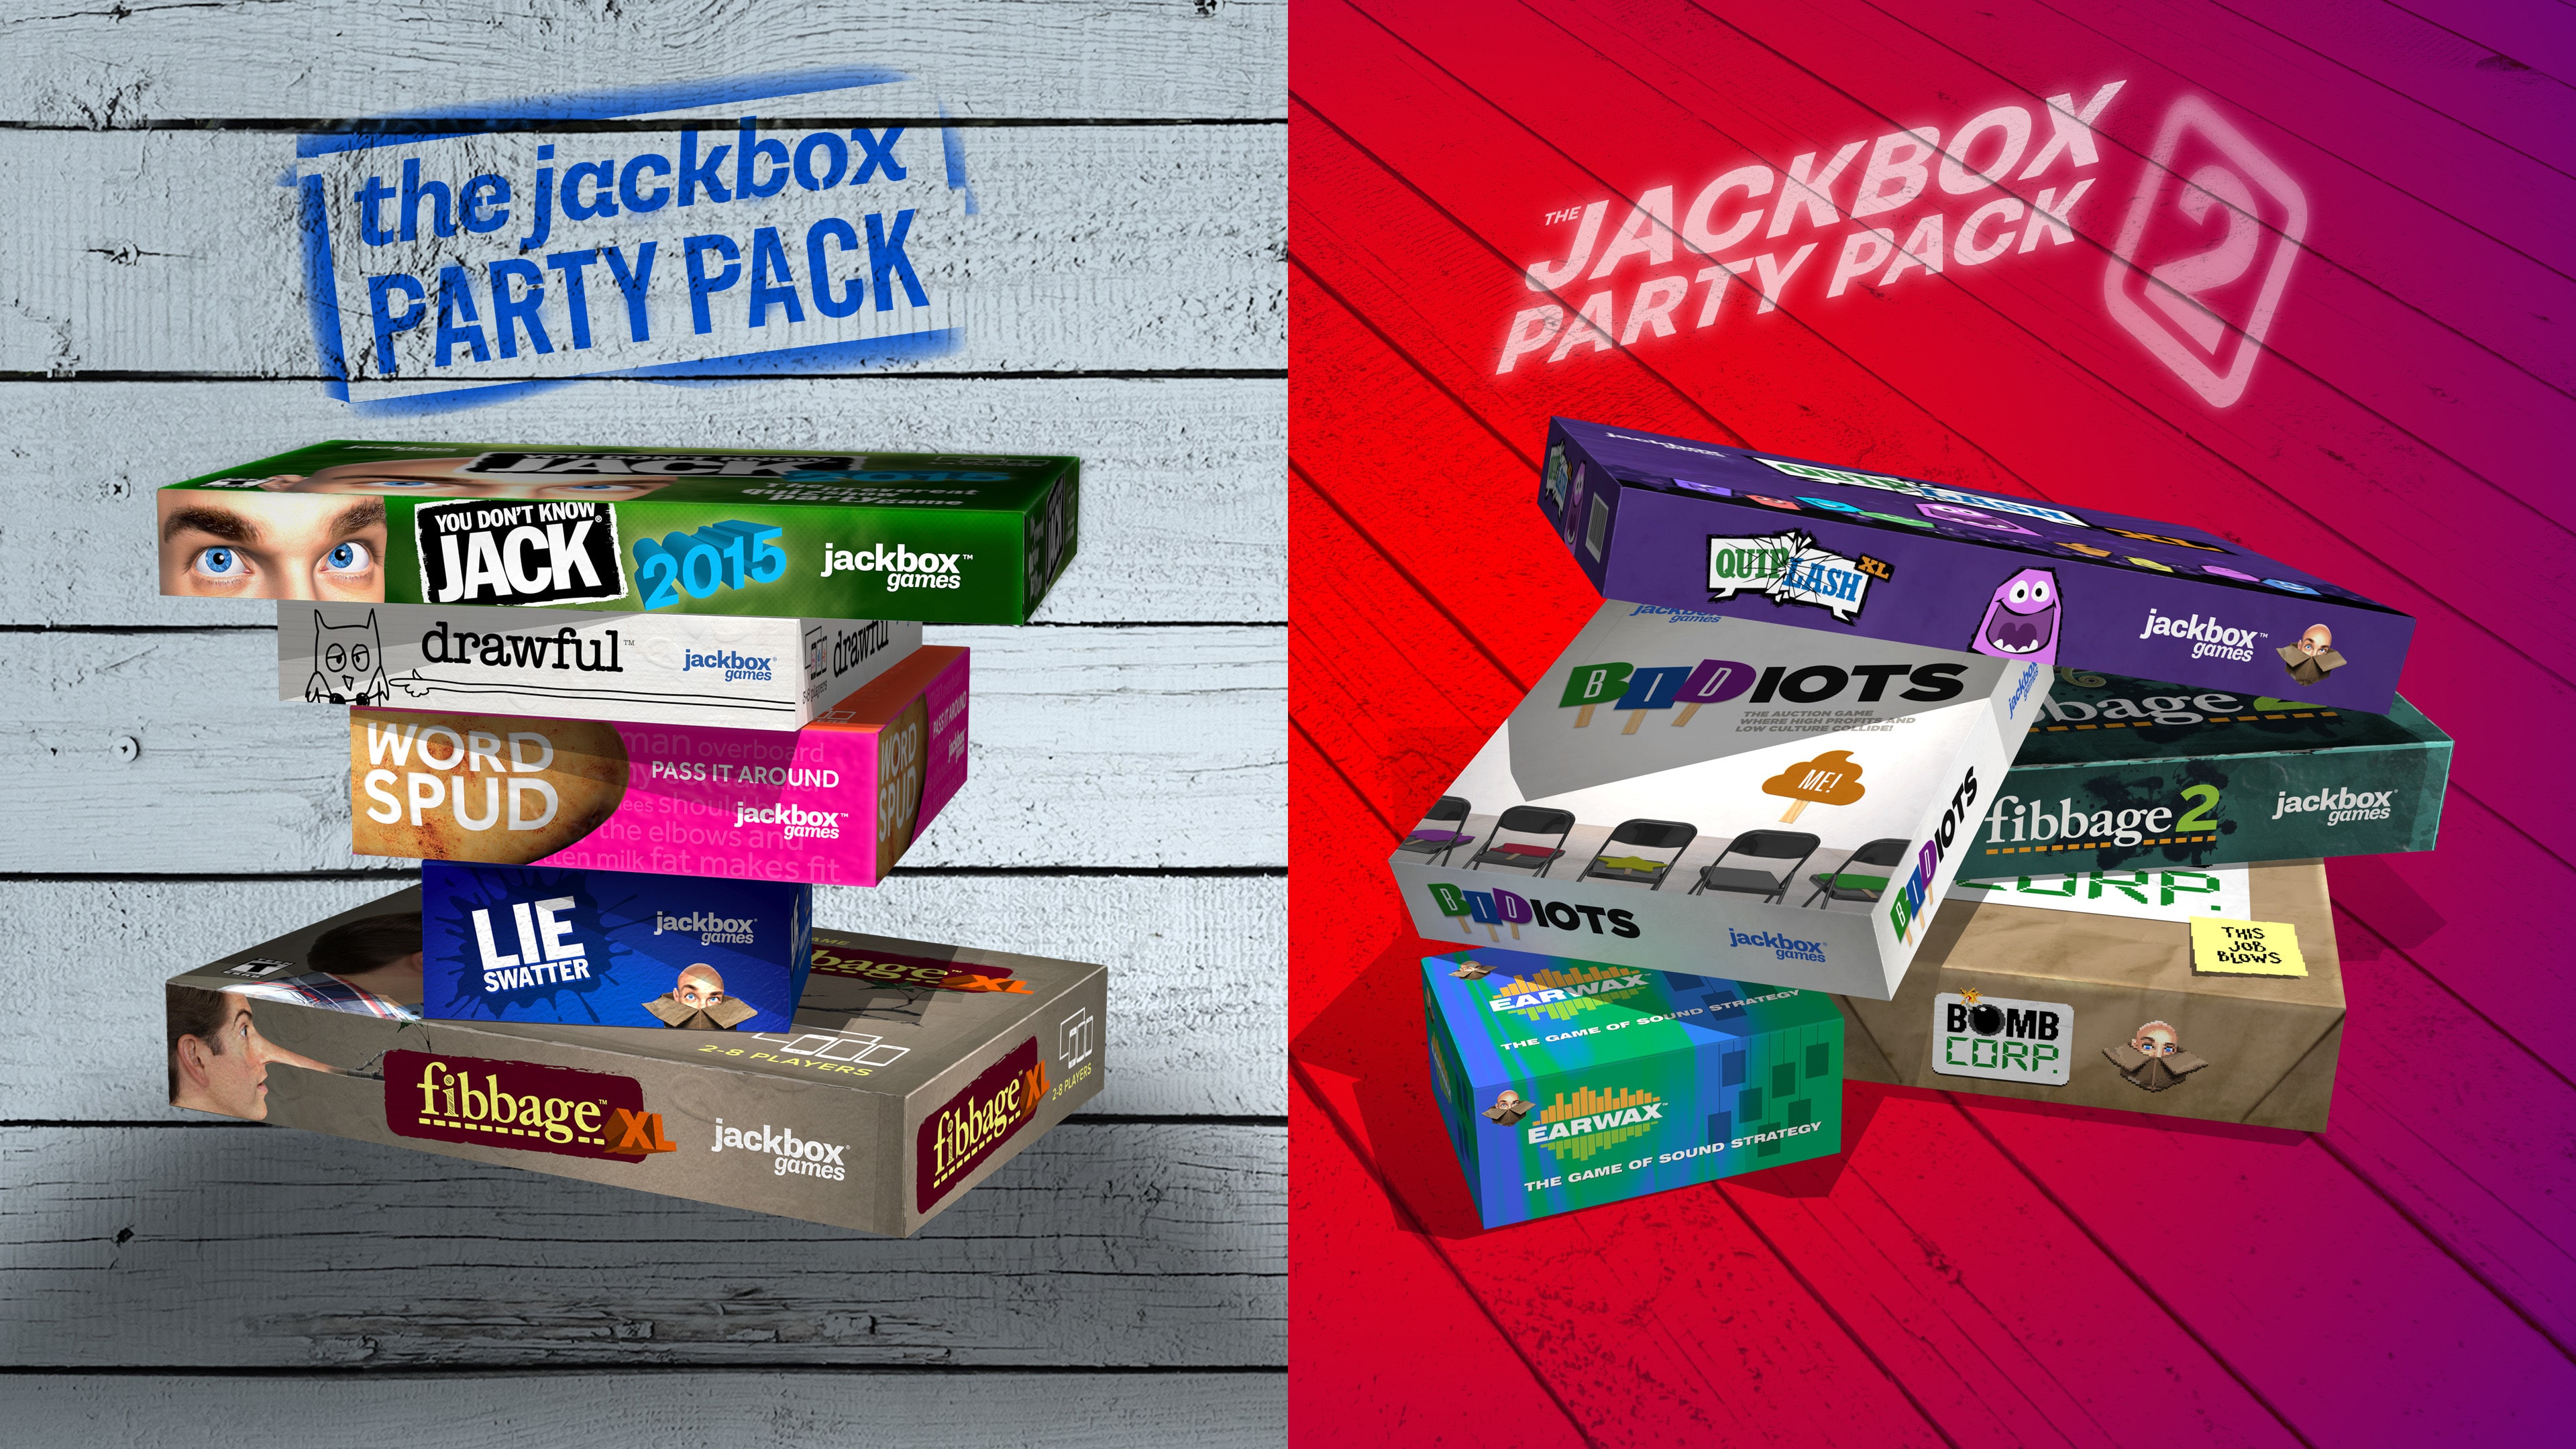 The Jackbox Party Bundle